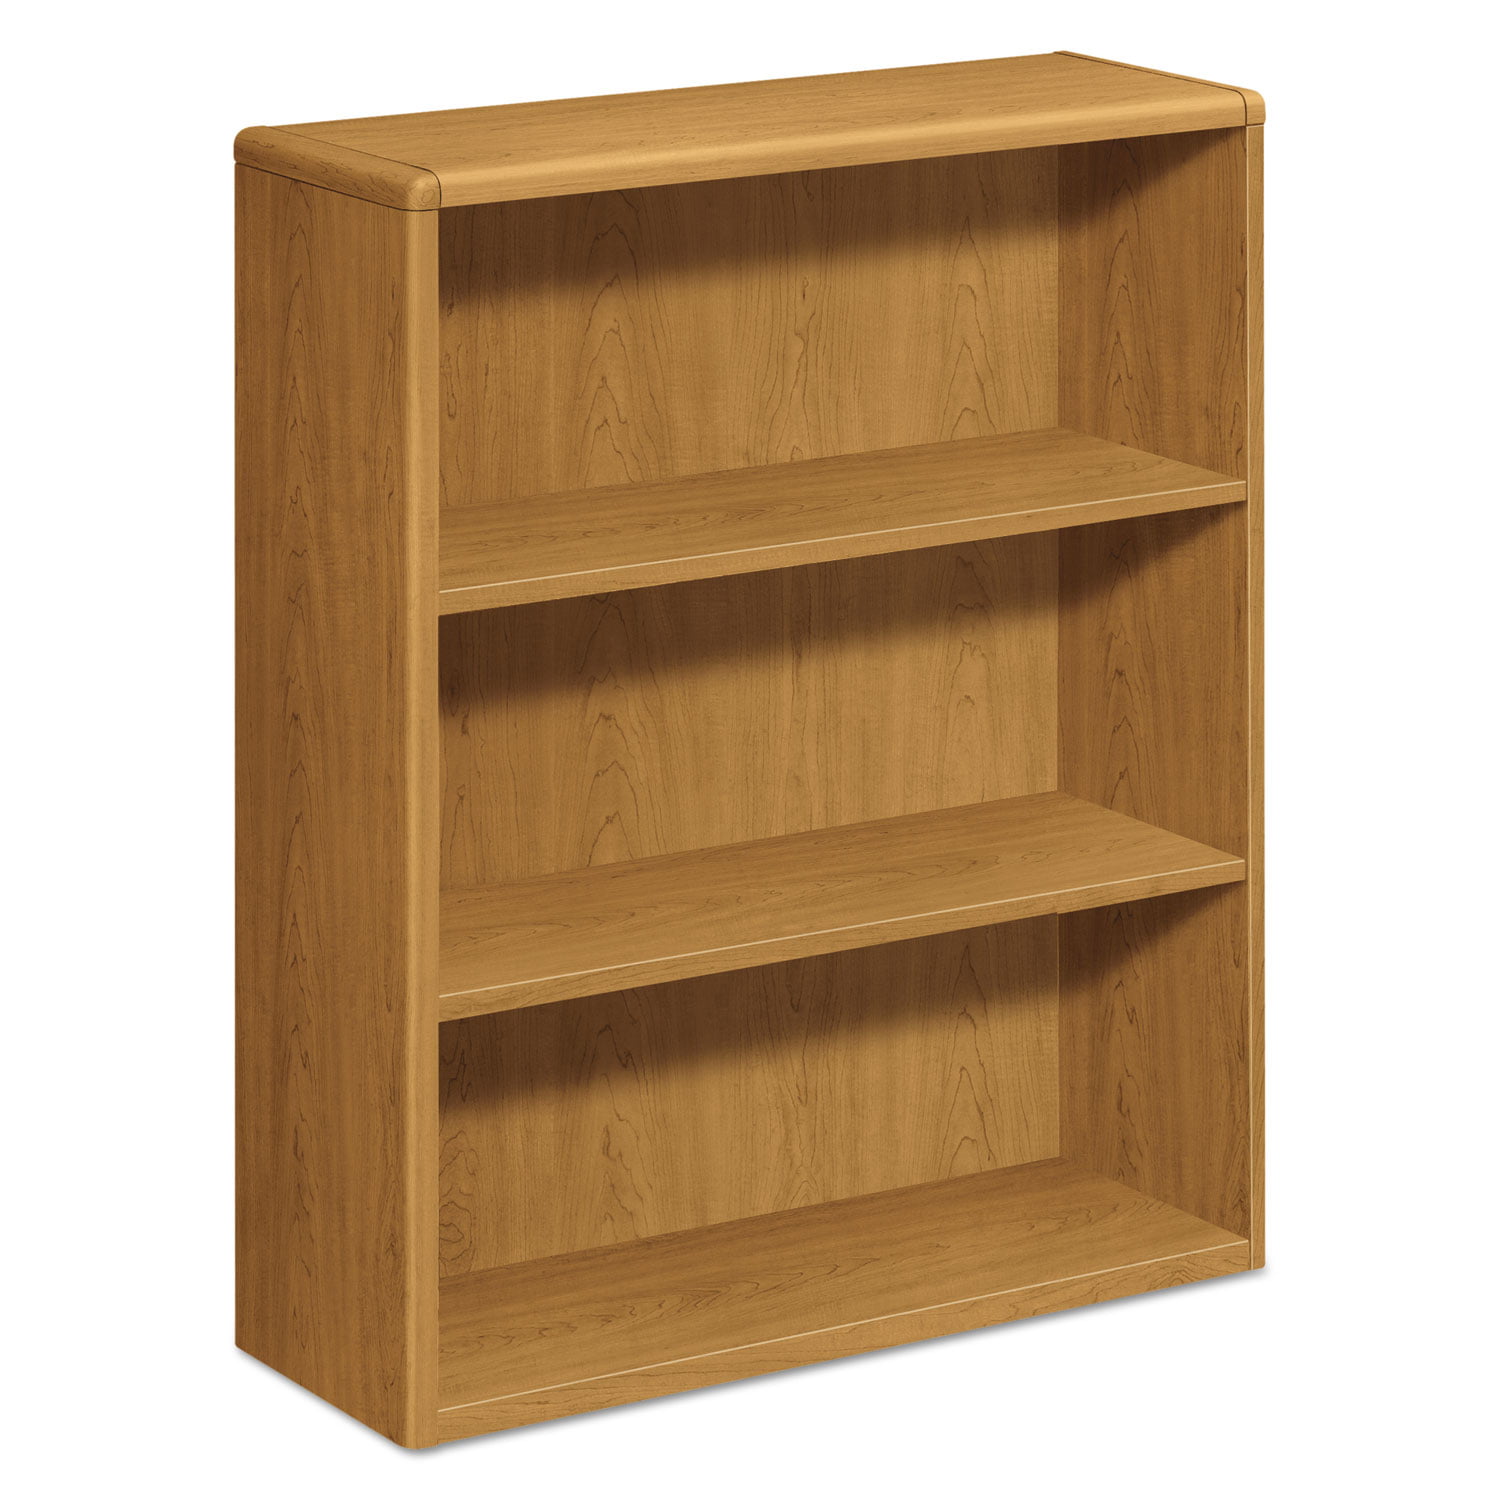 Details about   3-Shelf Wood Bookcase Wide Storage Book Display Adjustable Bookshelf Rustic Oak 